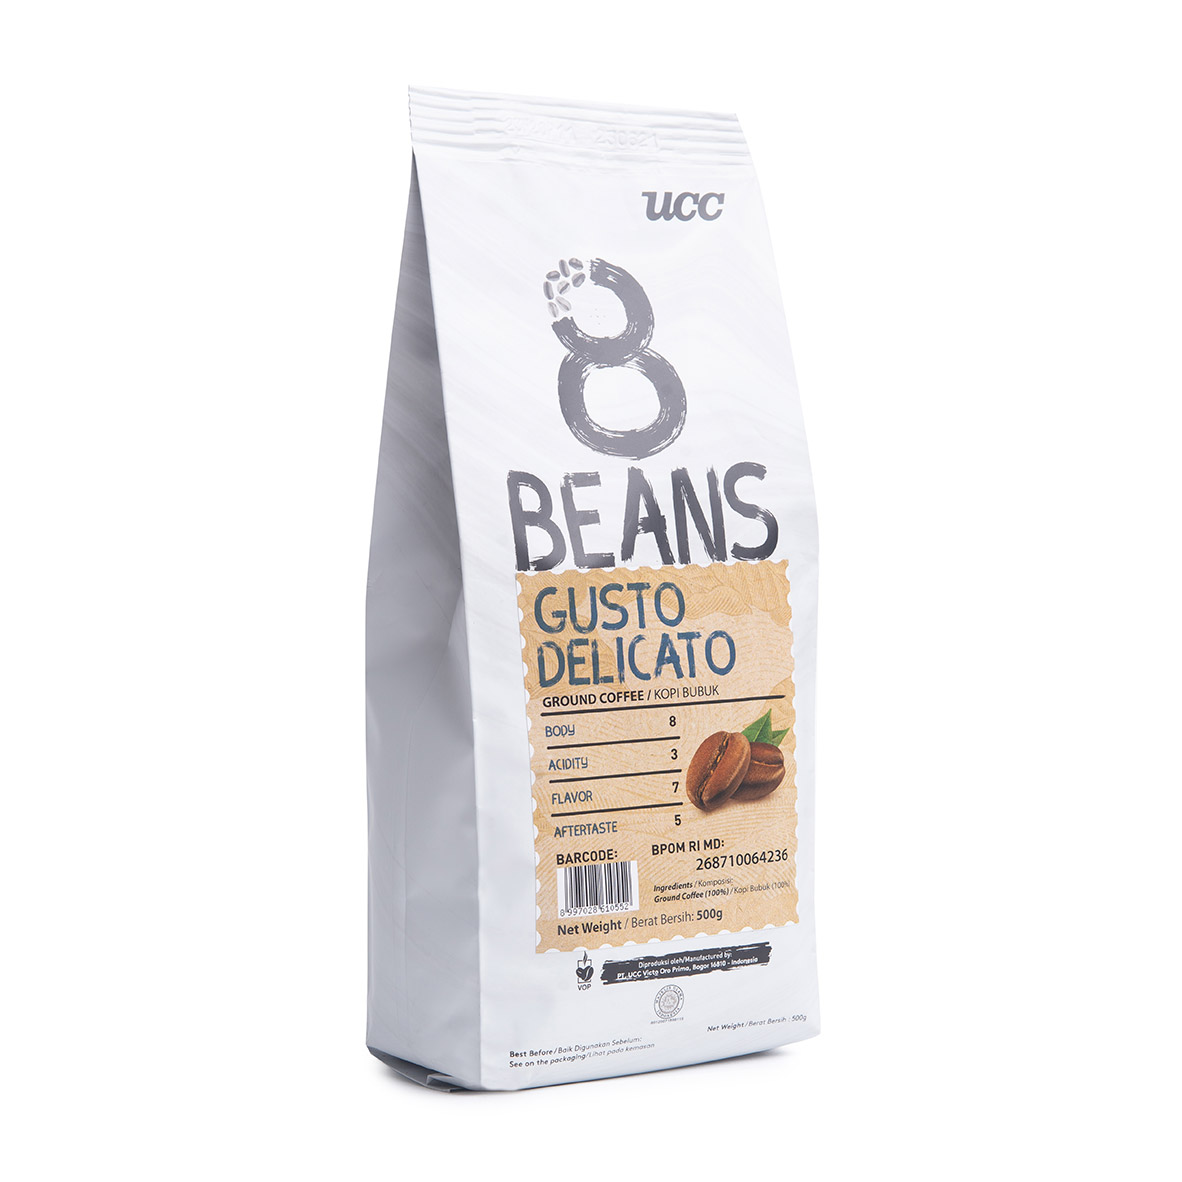 8 Beans Gusto Delicato